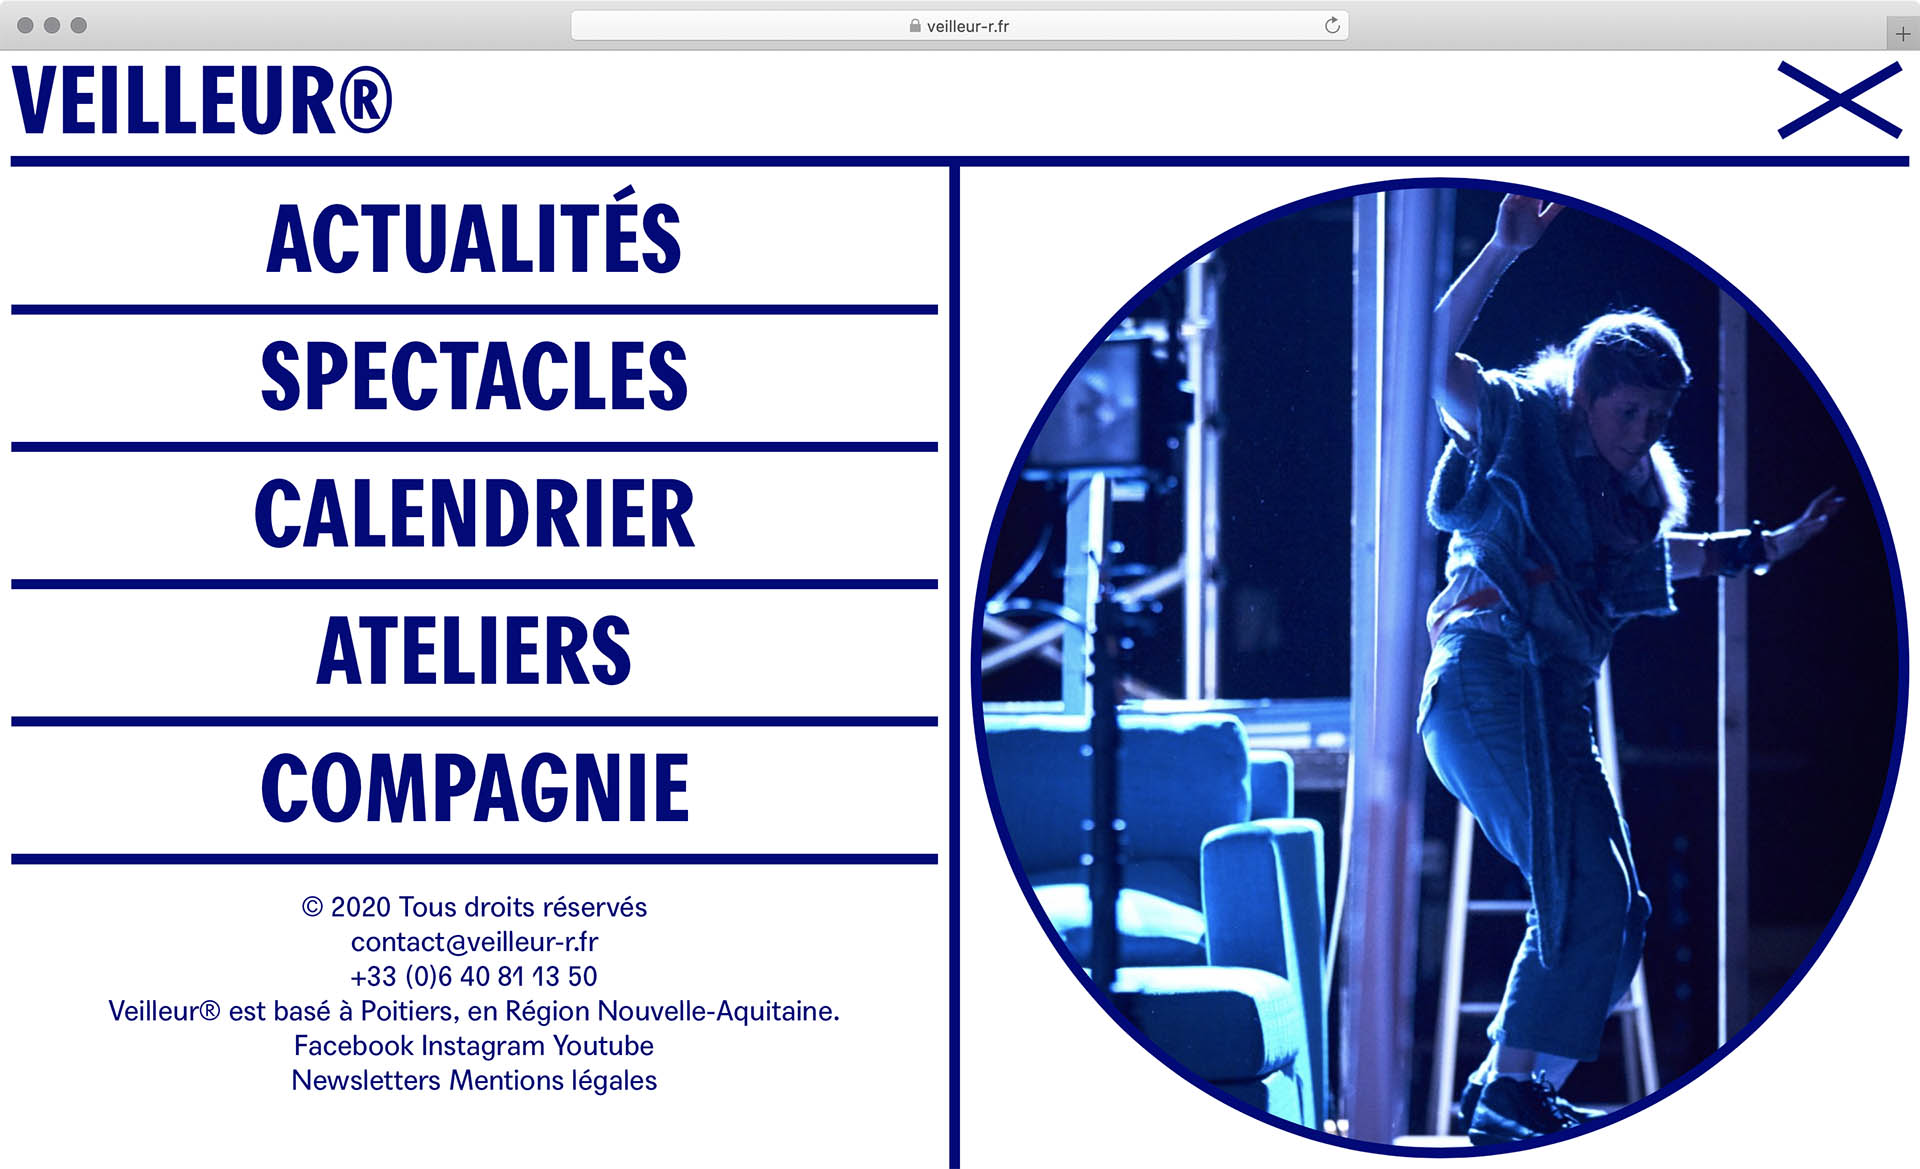 Cyril Makhoul - (link: https://veilleur-r.fr/ text: La compagnie du Veilleur®)— Visual Identity and webdesign.